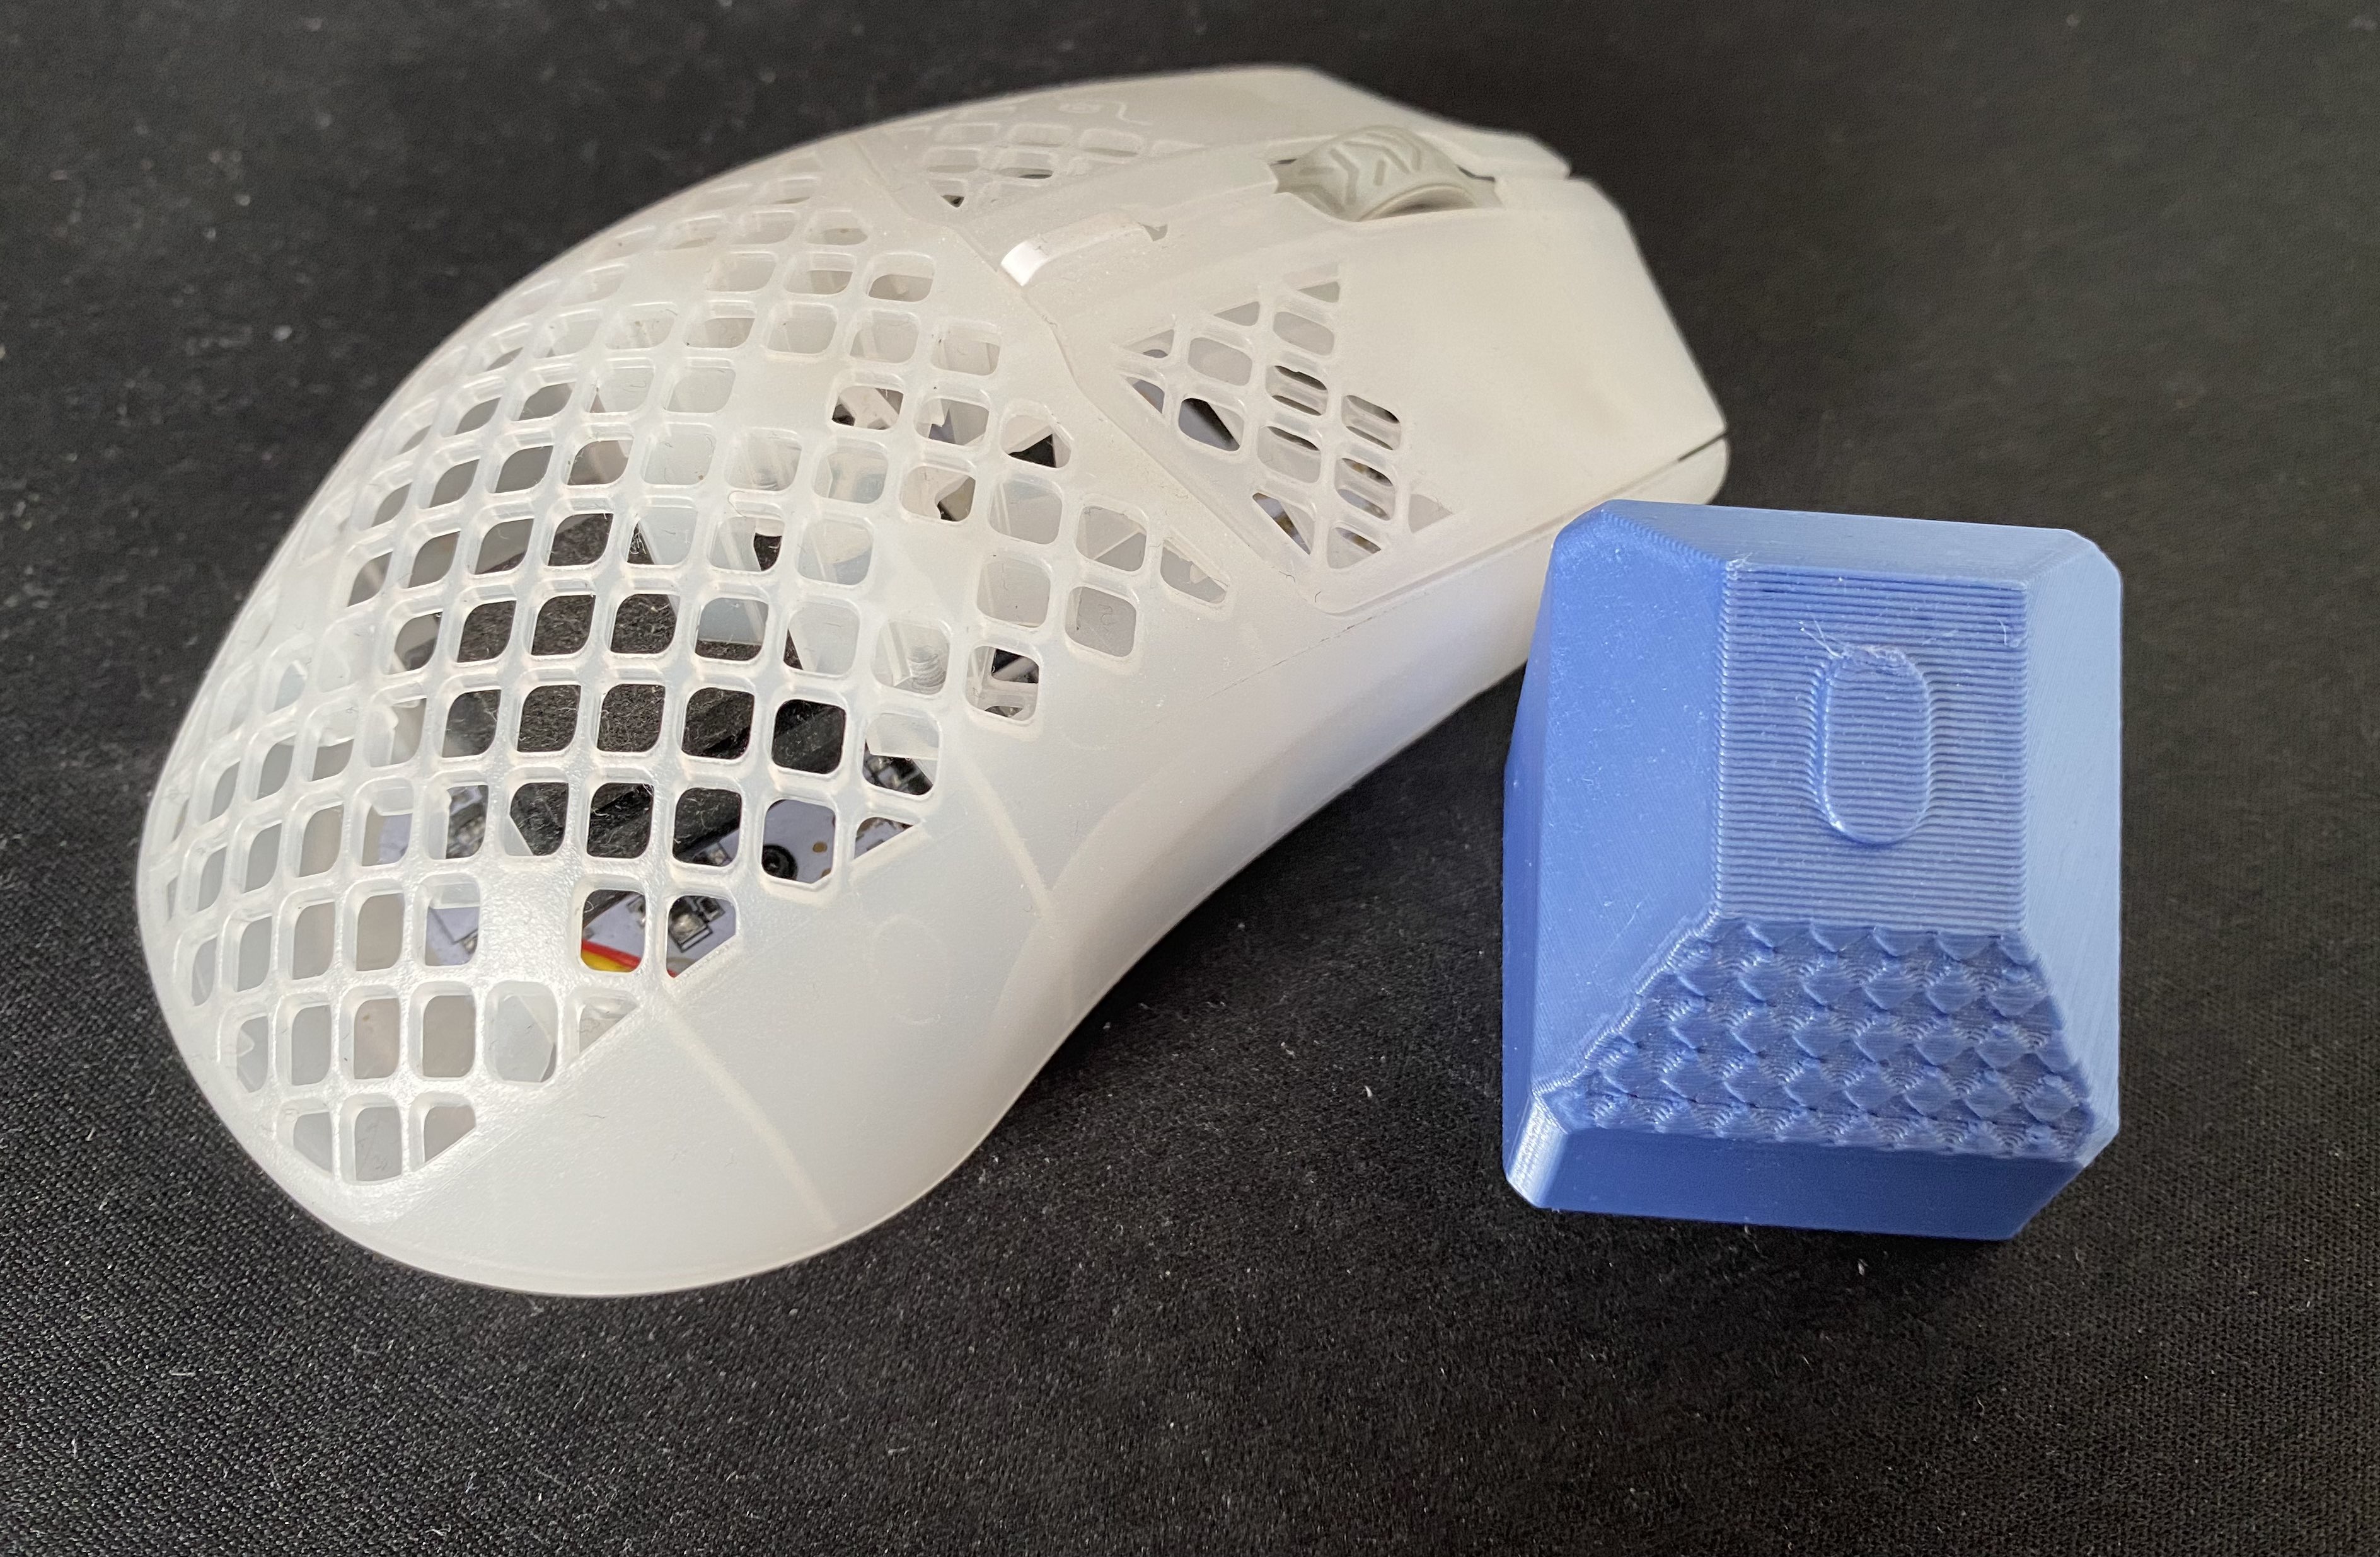 Steelseries mouse holder/ mouse holder